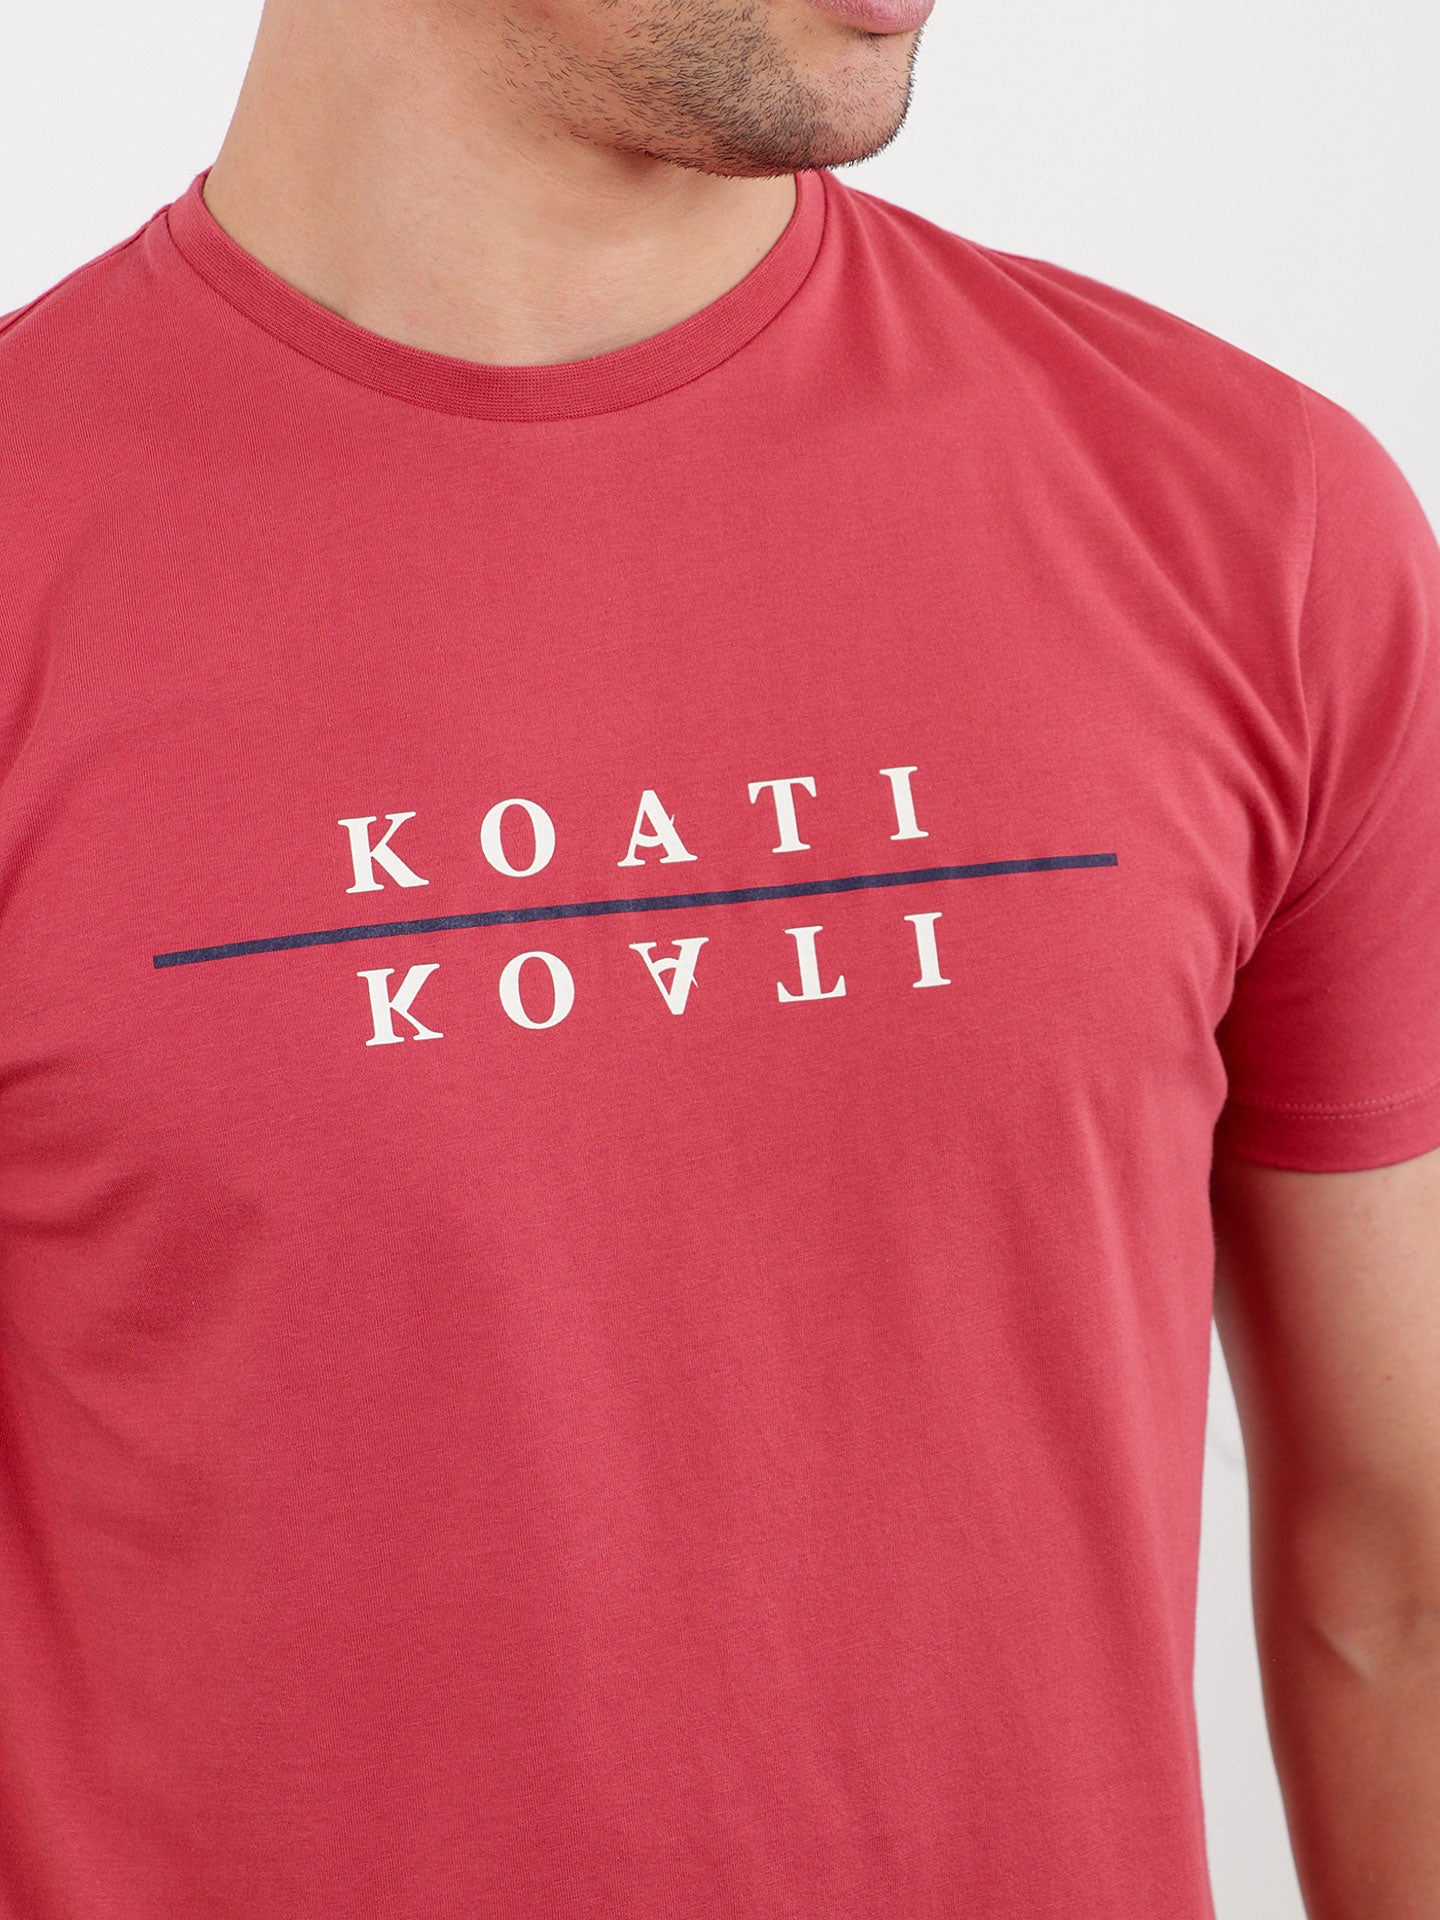 T-Shirt Jersey Estampada Koati 2 Cores